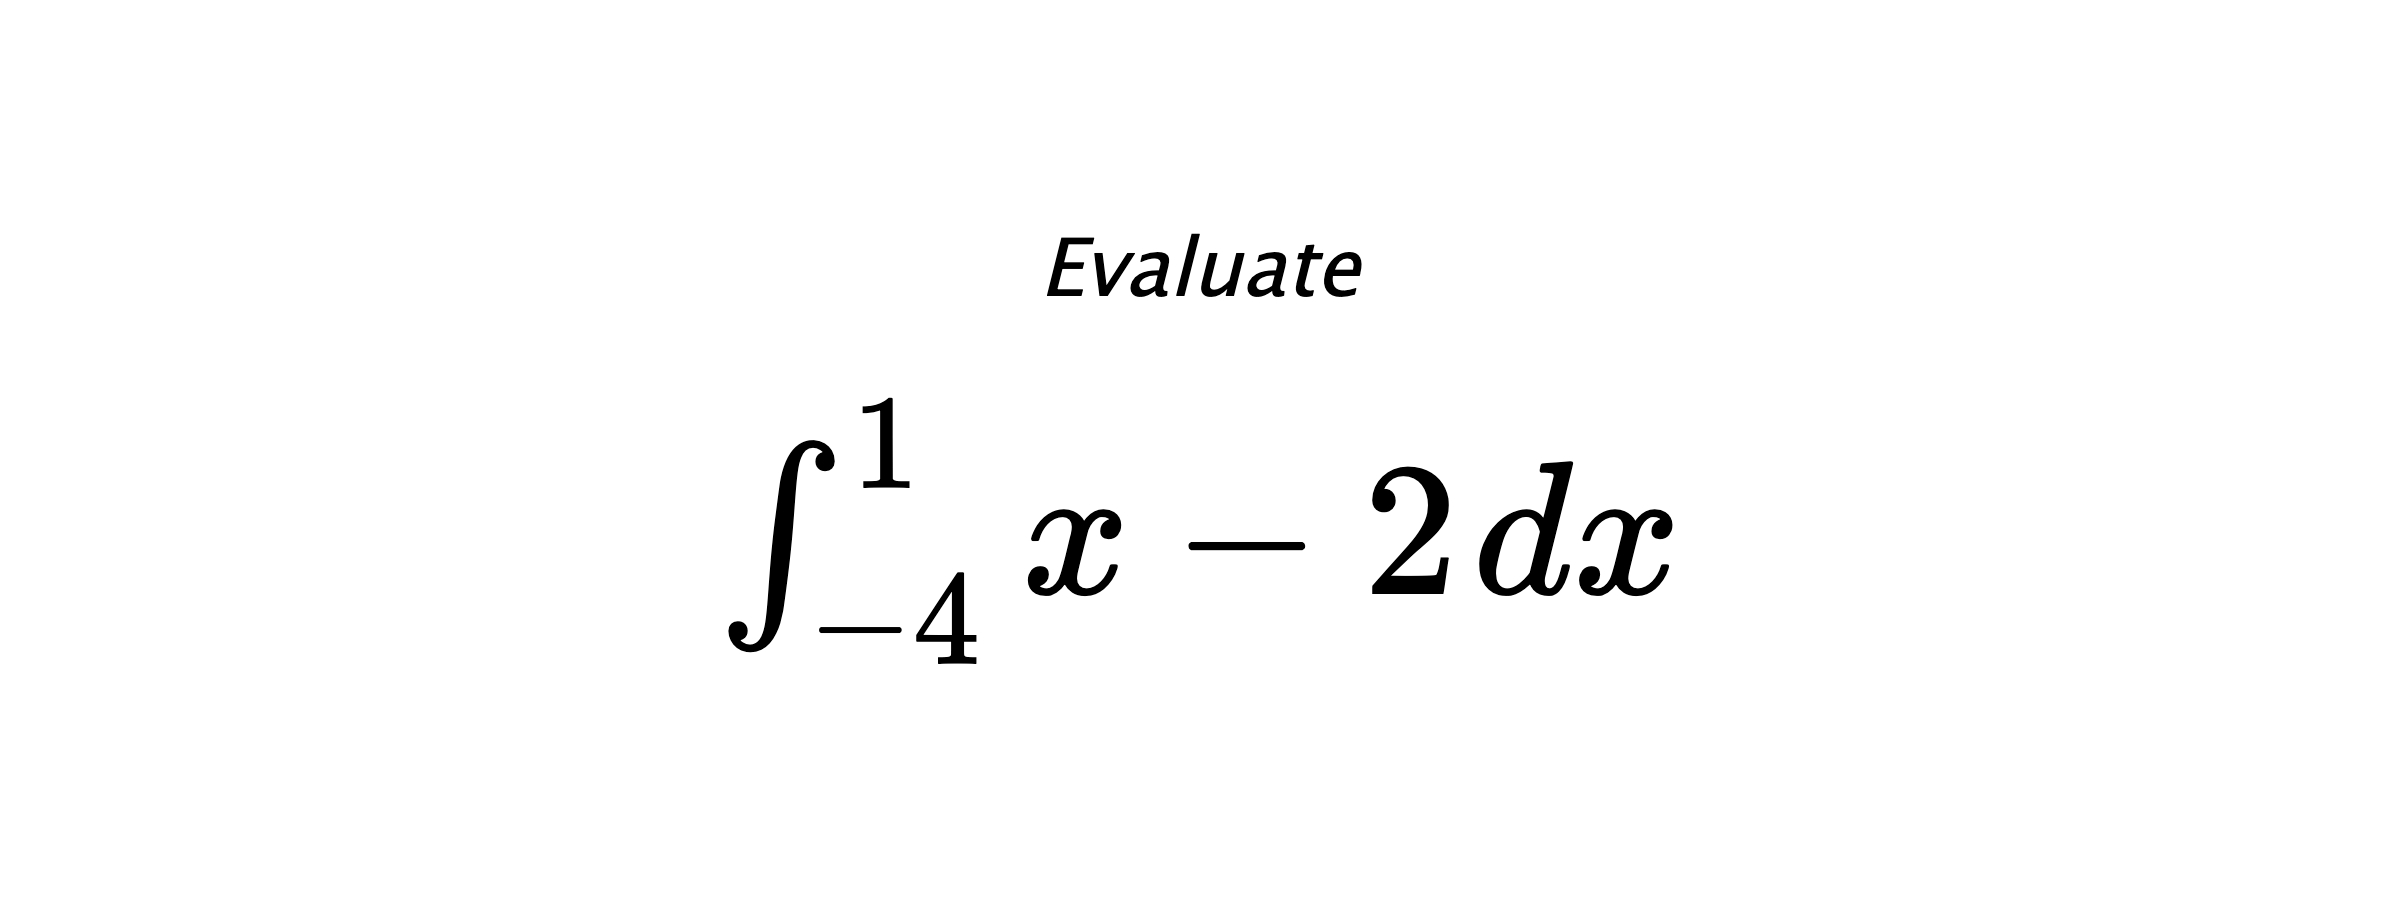 Evaluate $ \int_{-4}^{1} x-2 \hspace{0.2cm} dx $